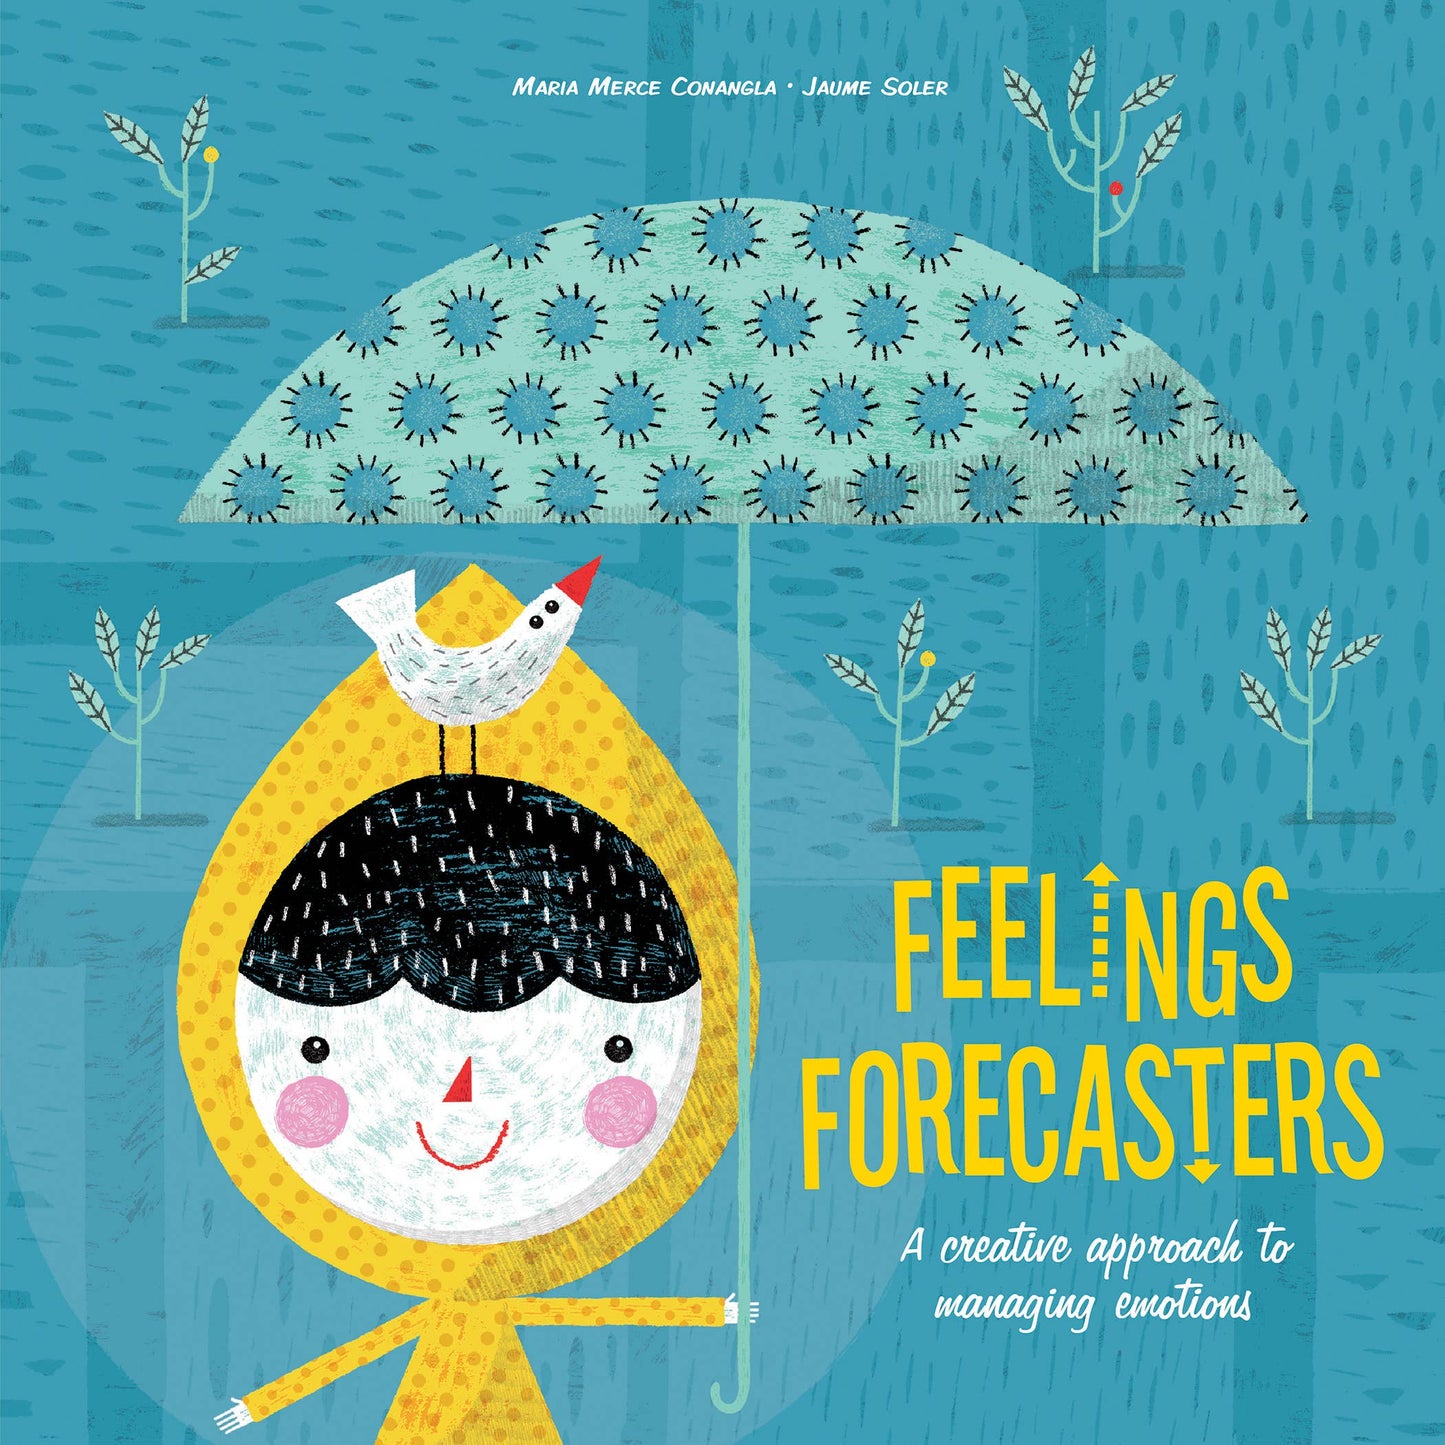 Feelings Forecasters